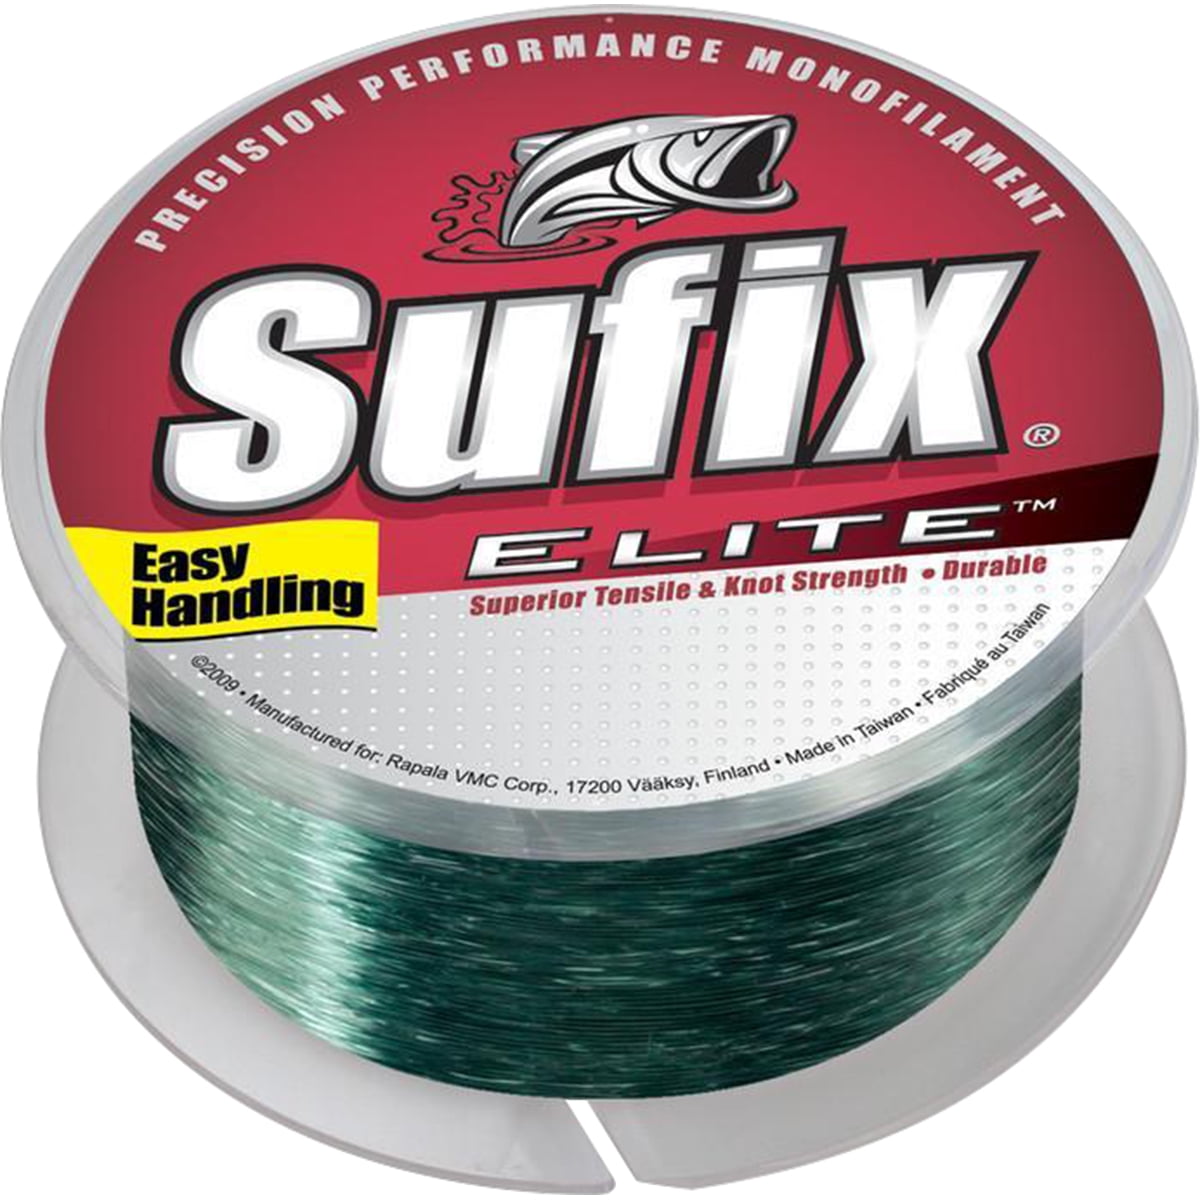 Sufix Elite 6 lb Test Fishing Line (330 yds) - Lo-Vis Green